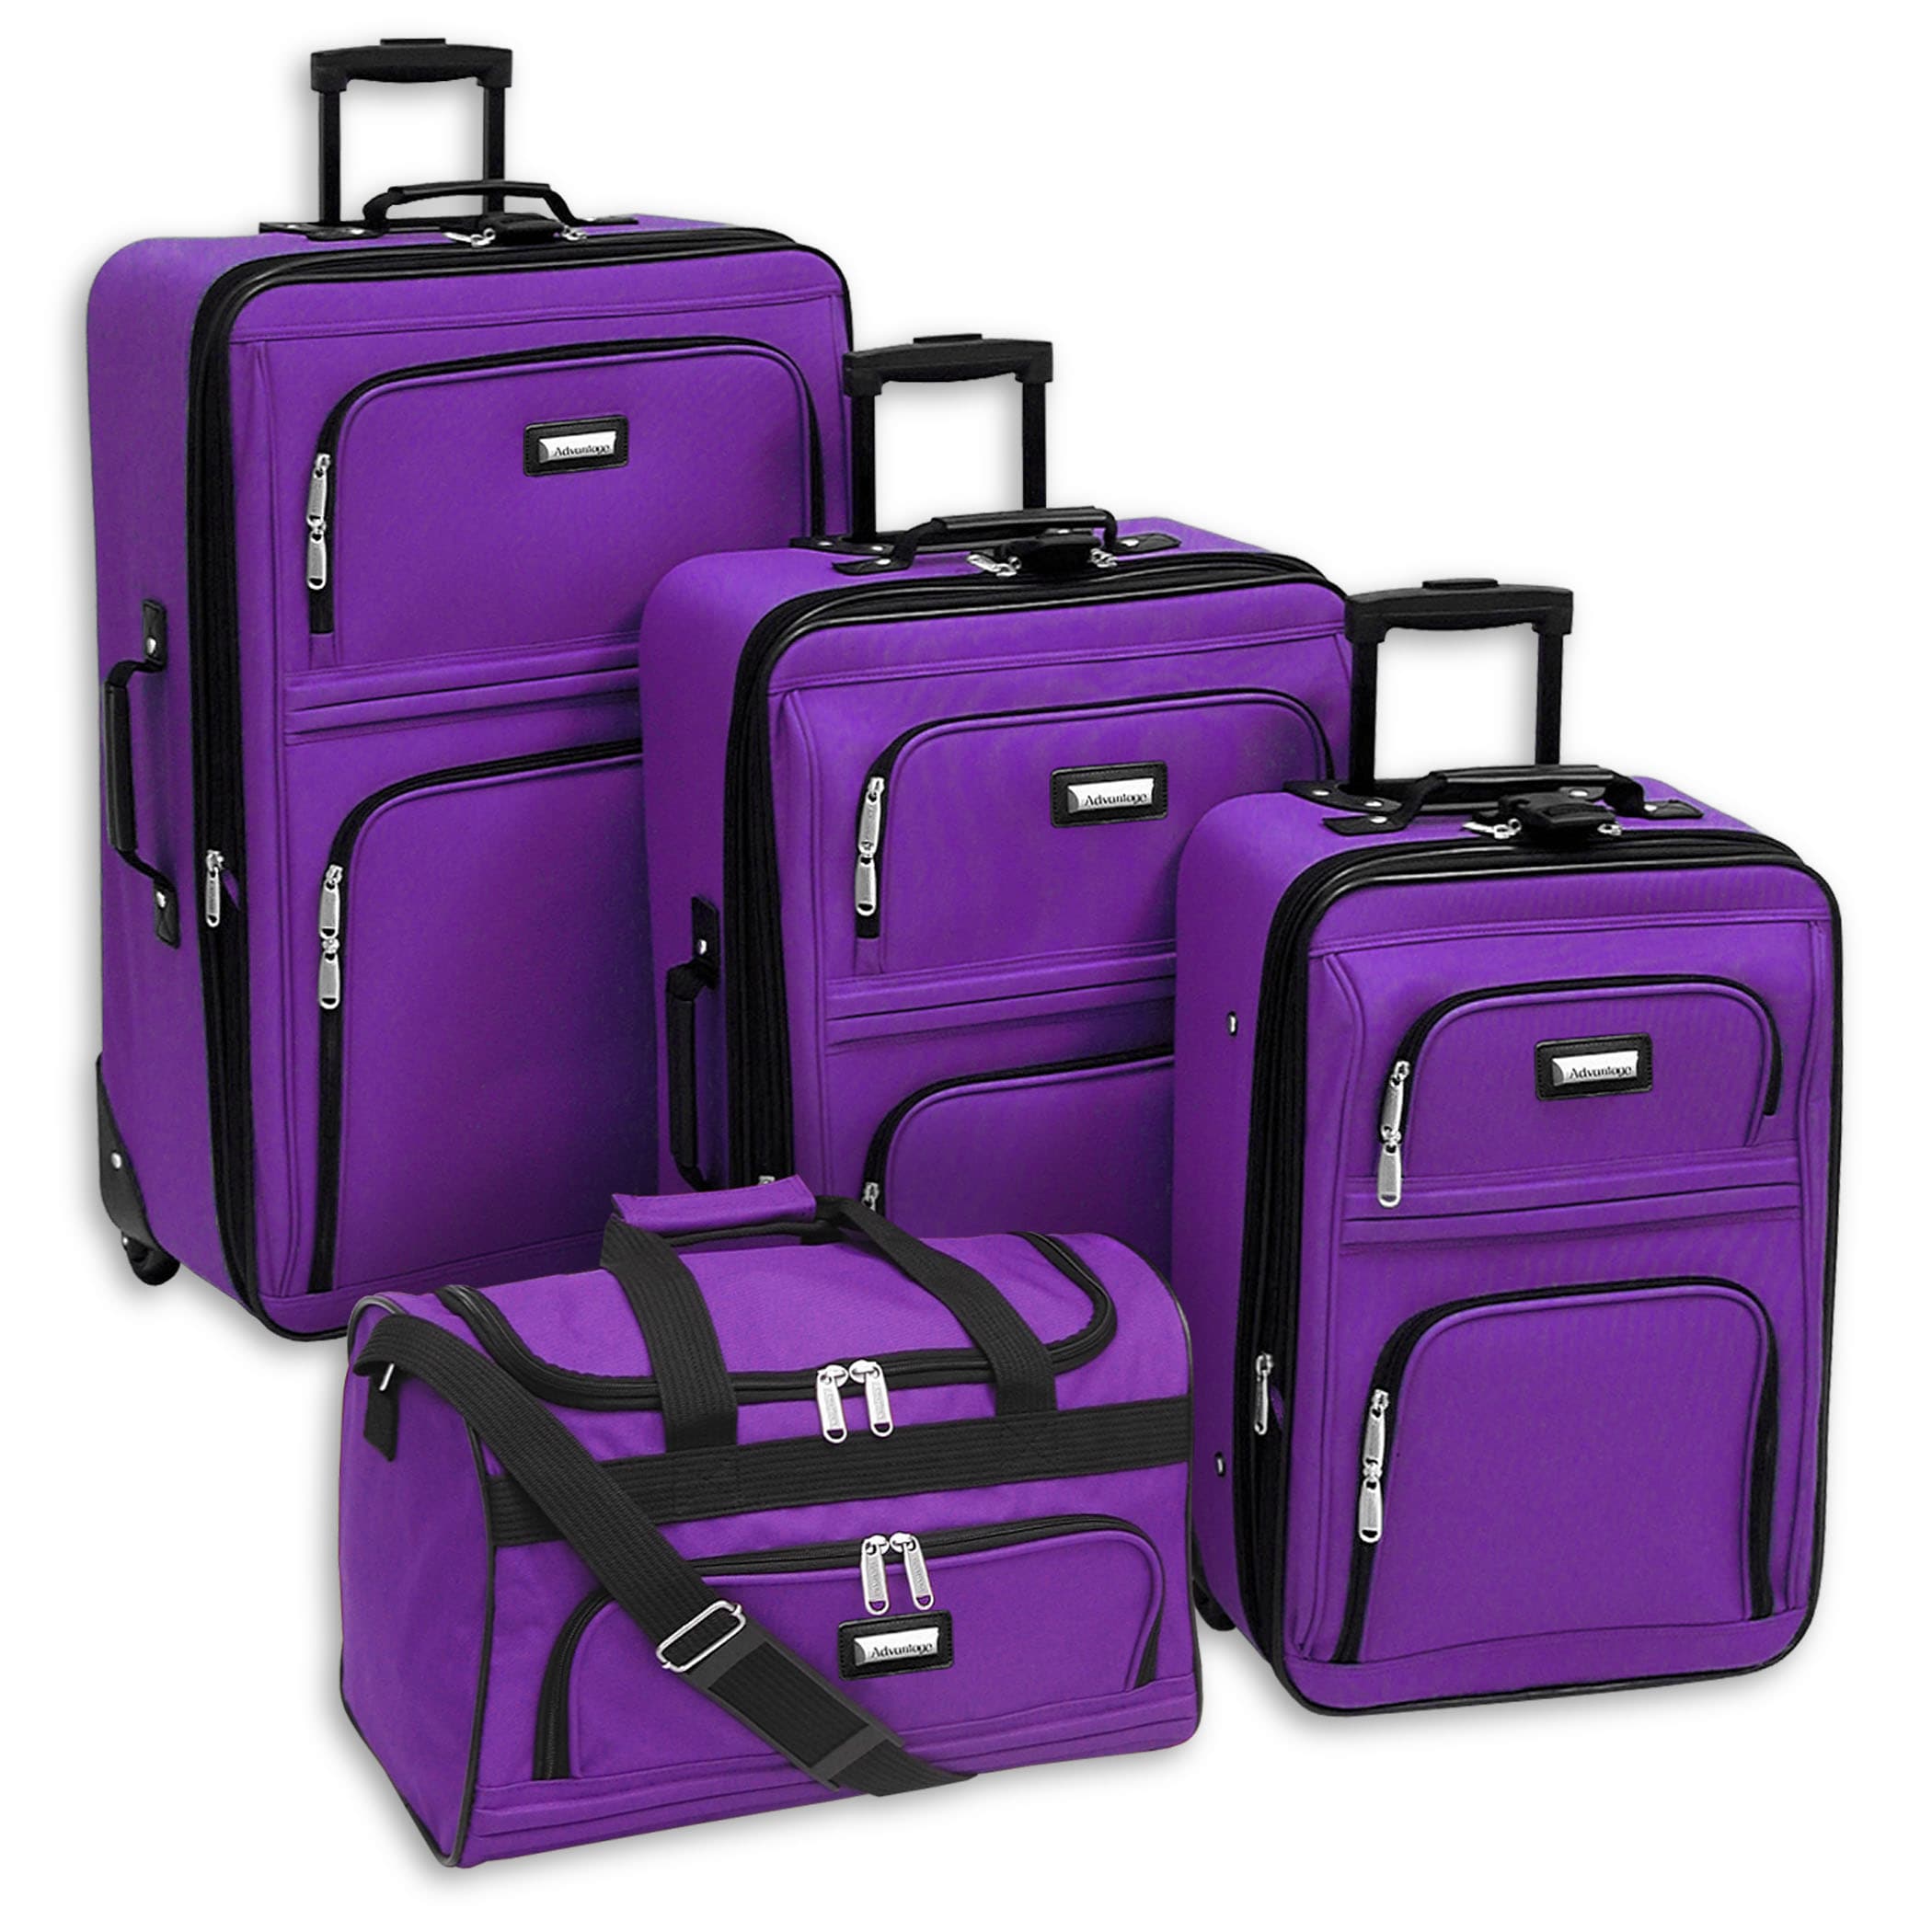 Advantage Trends Collection Amethyst 4-piece Luggage Set - 13858756 - comicsahoy.com Shopping ...